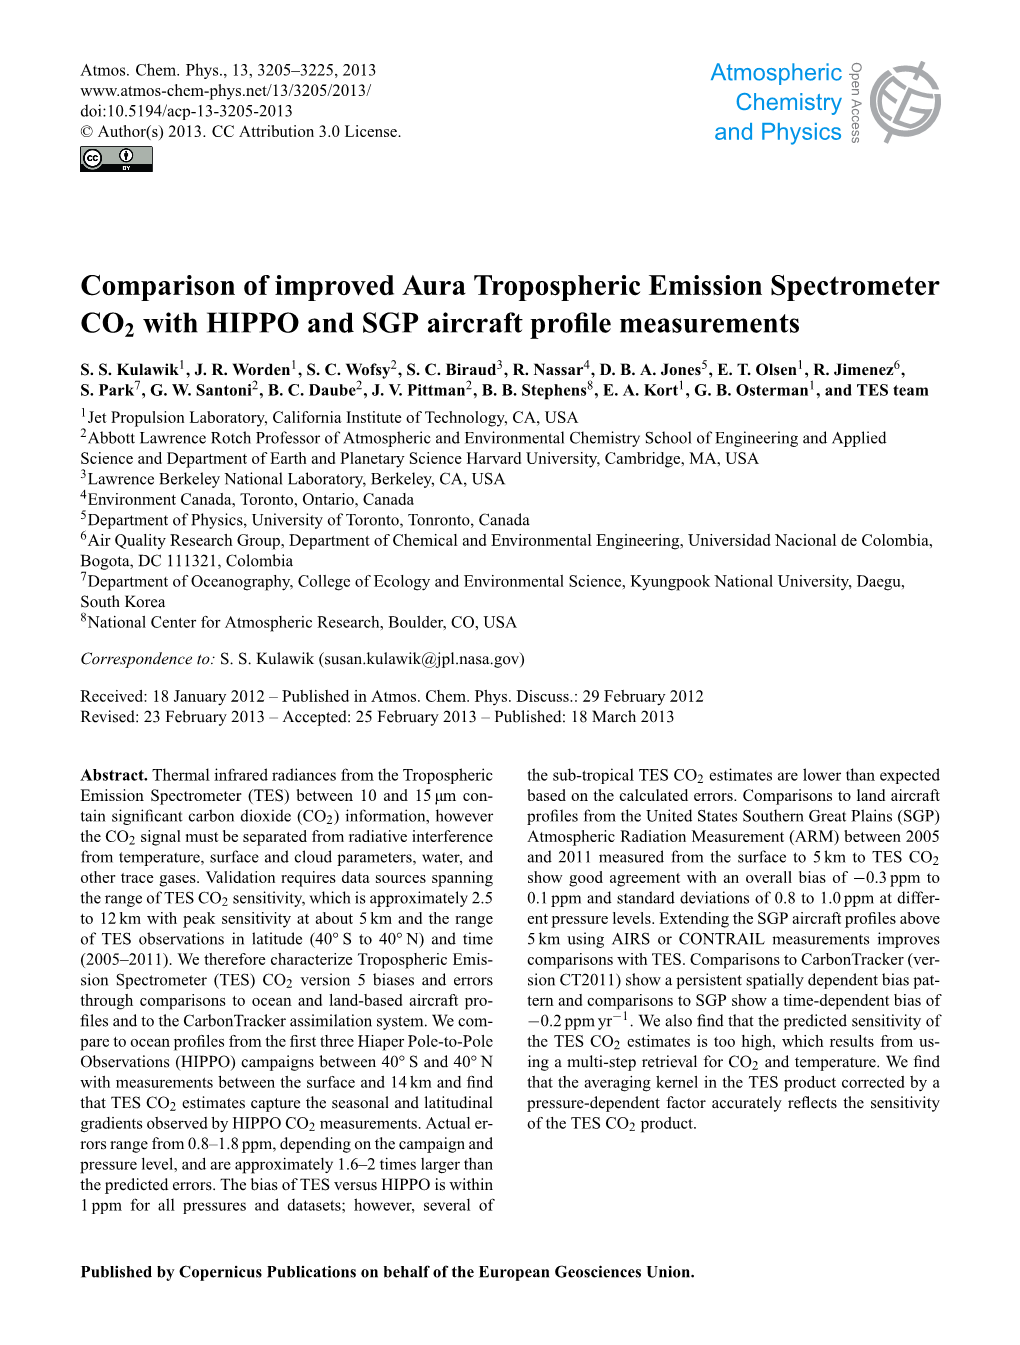 Comparison of Improved Aura Tropospheric Emission